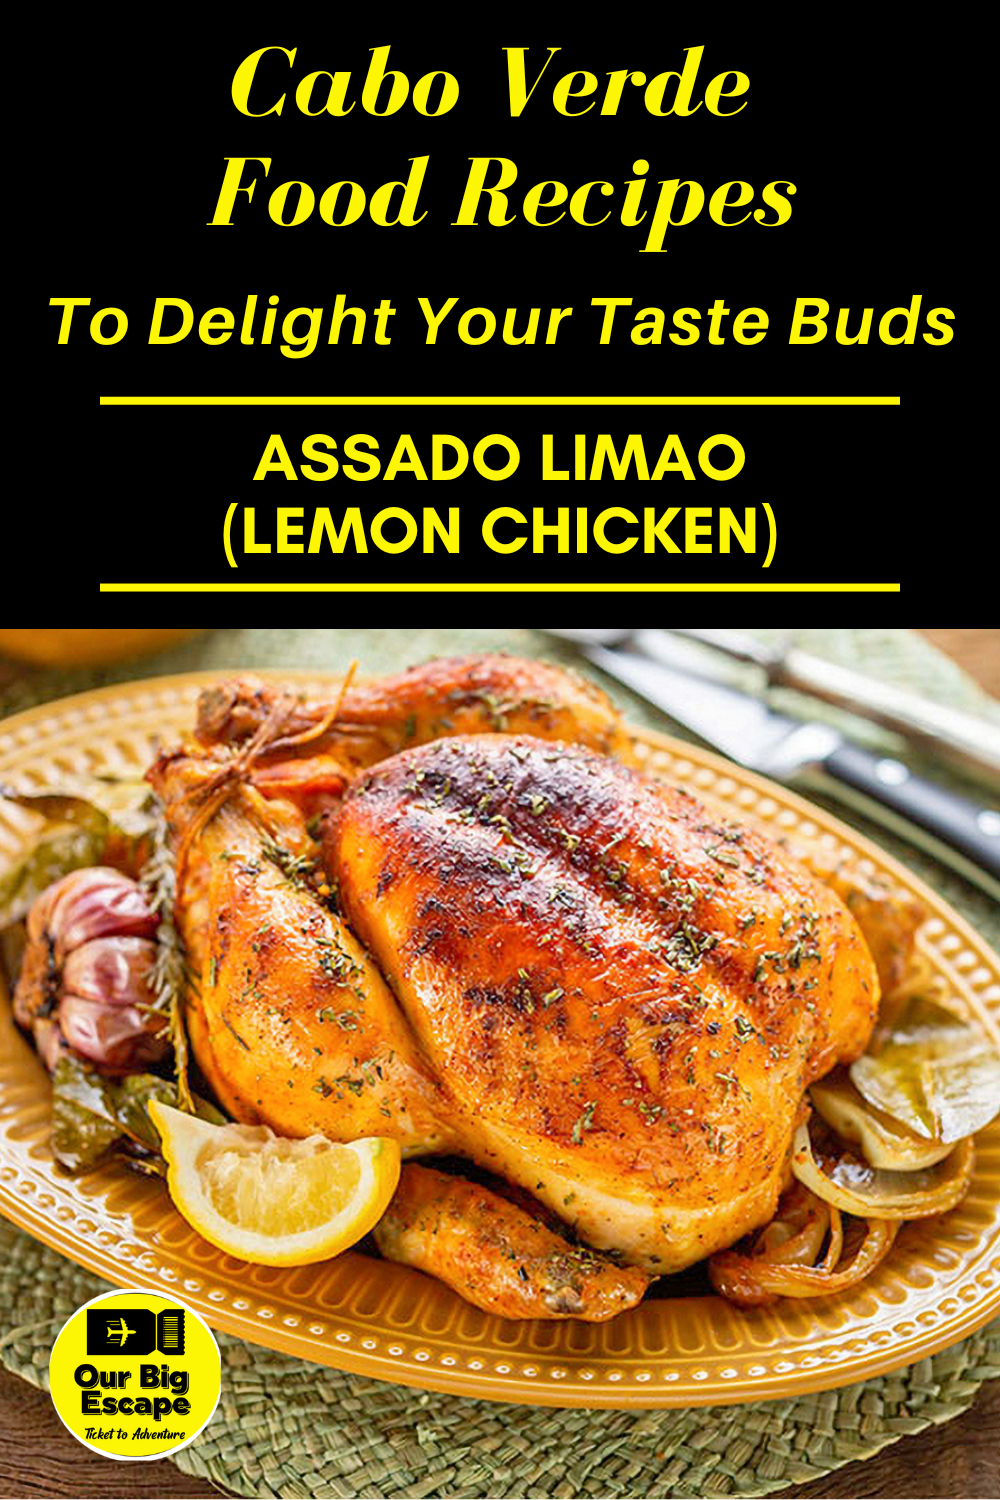 Assado Limao (Lemon Chicken) - Cabo Verde Food Recipes To Delight Your Taste Buds